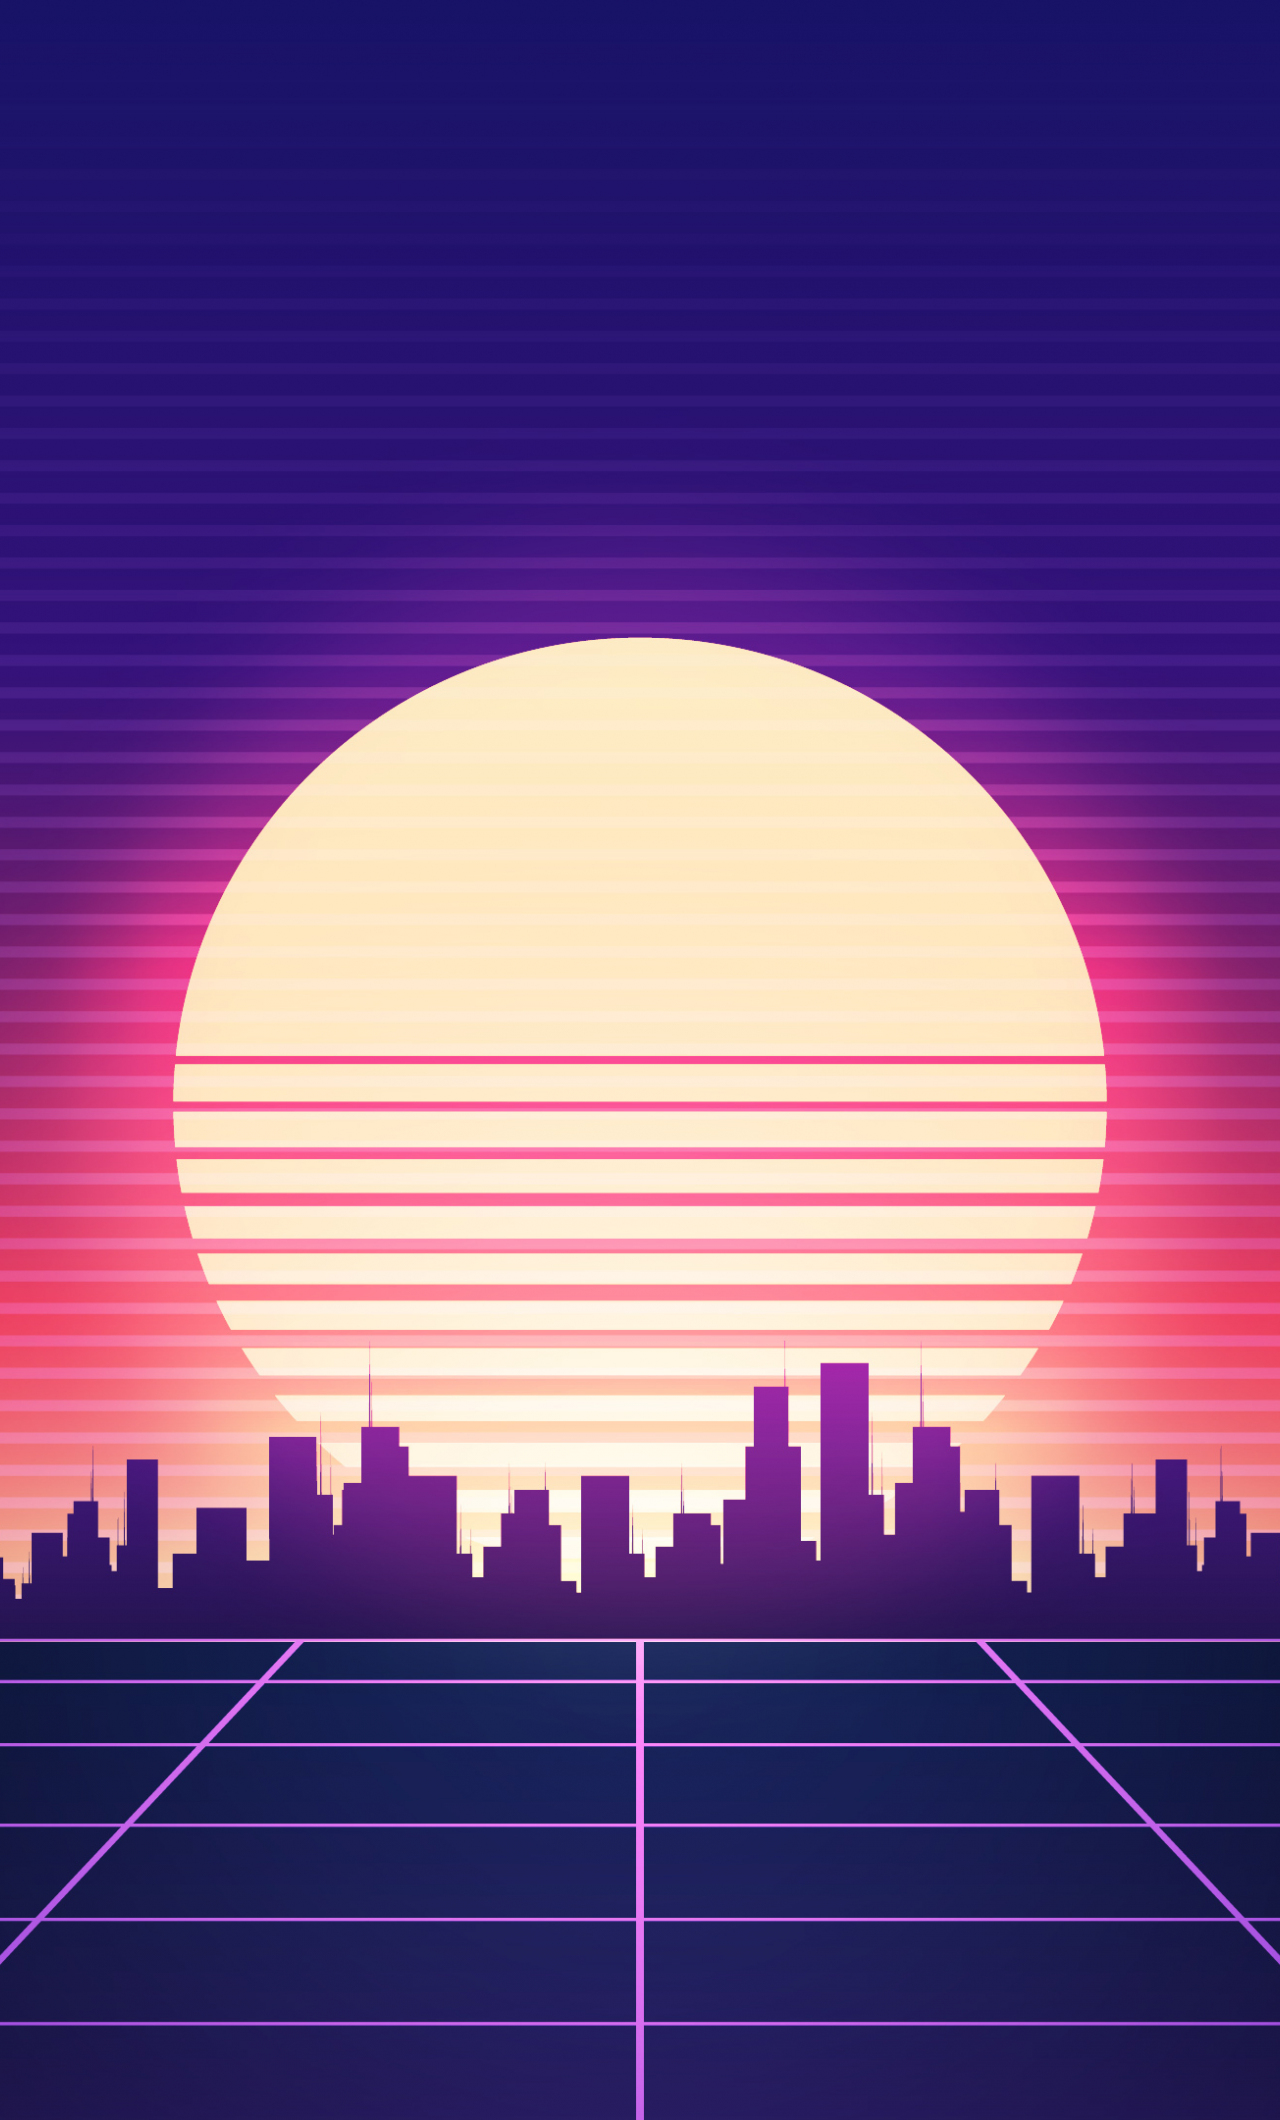 A purple and orange sunset over a city skyline - Grid